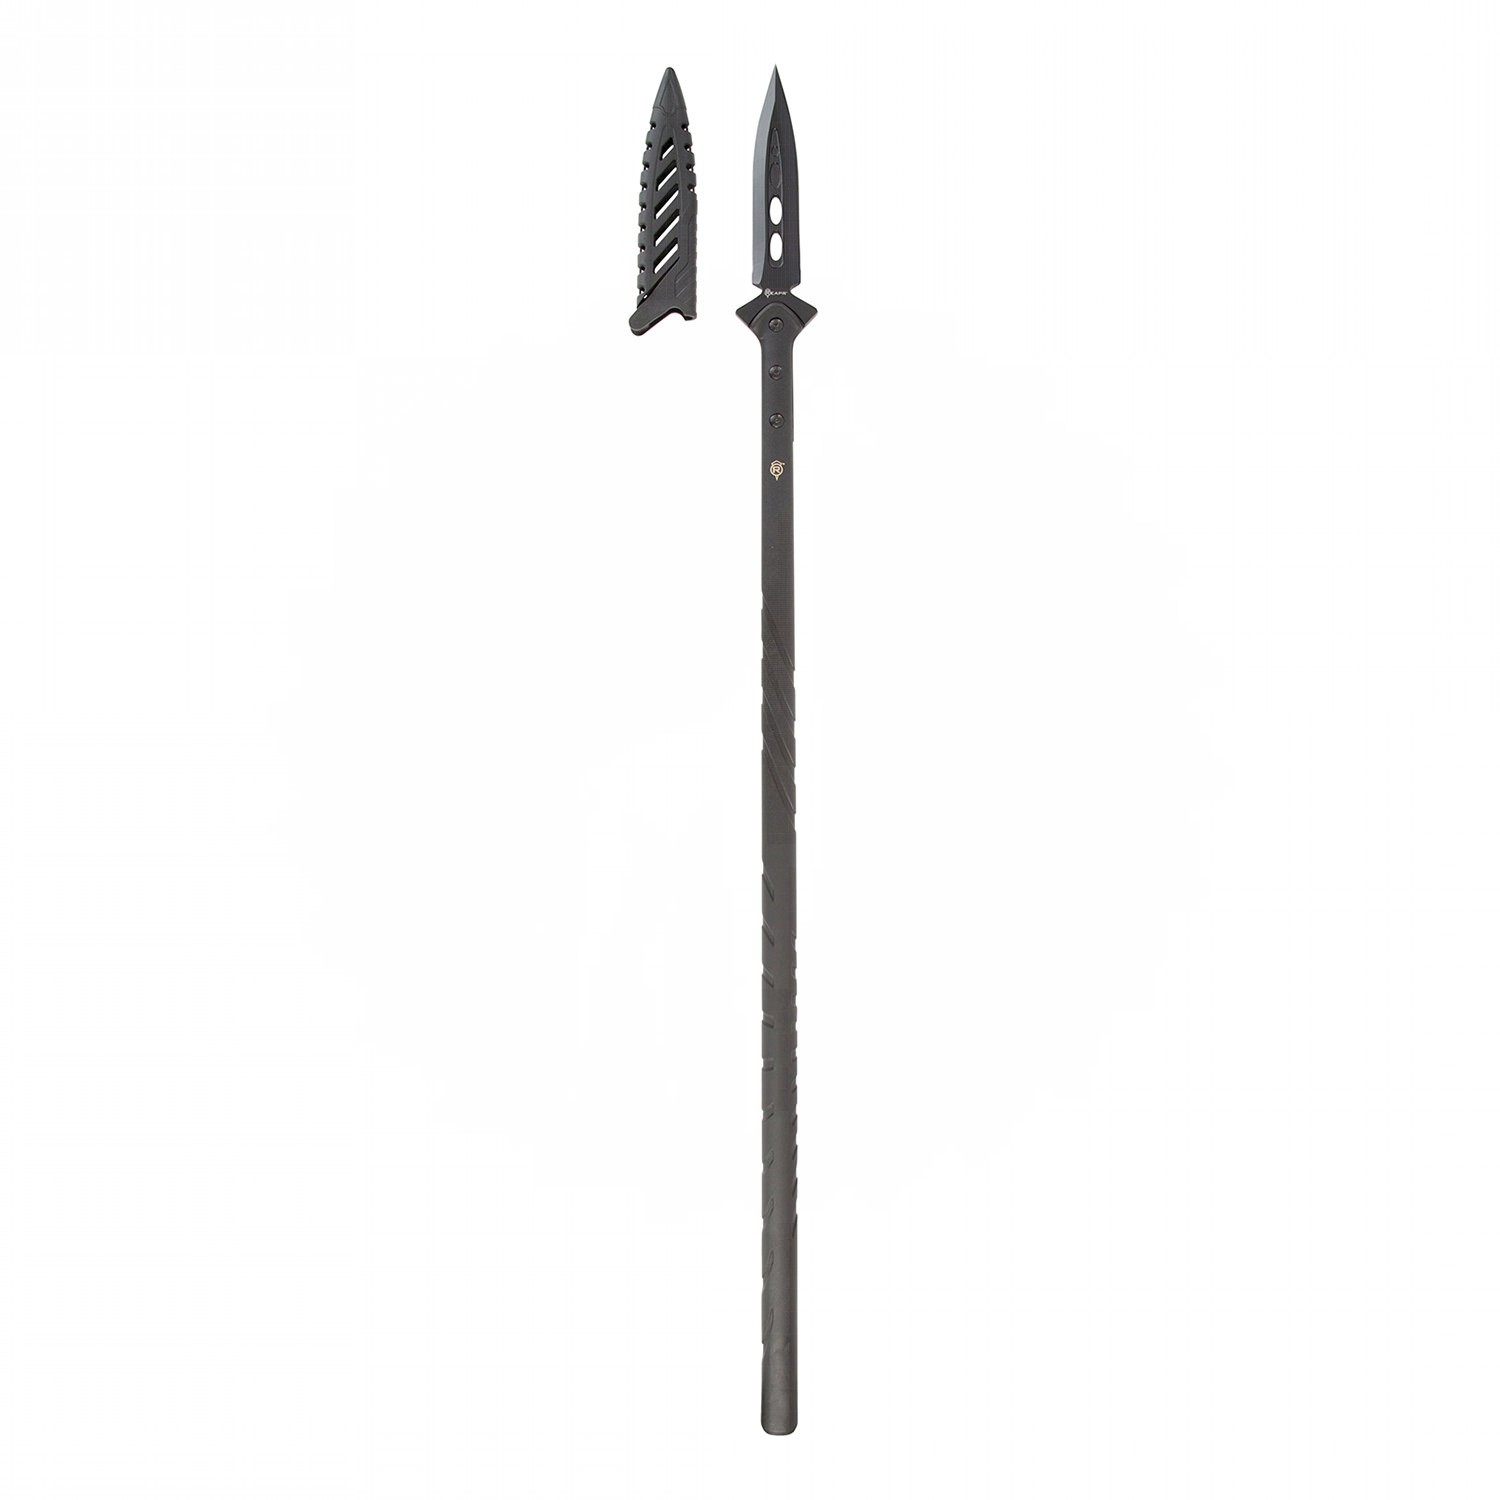 Sheffield Survival Spear - 8.125" Double Edge Blade